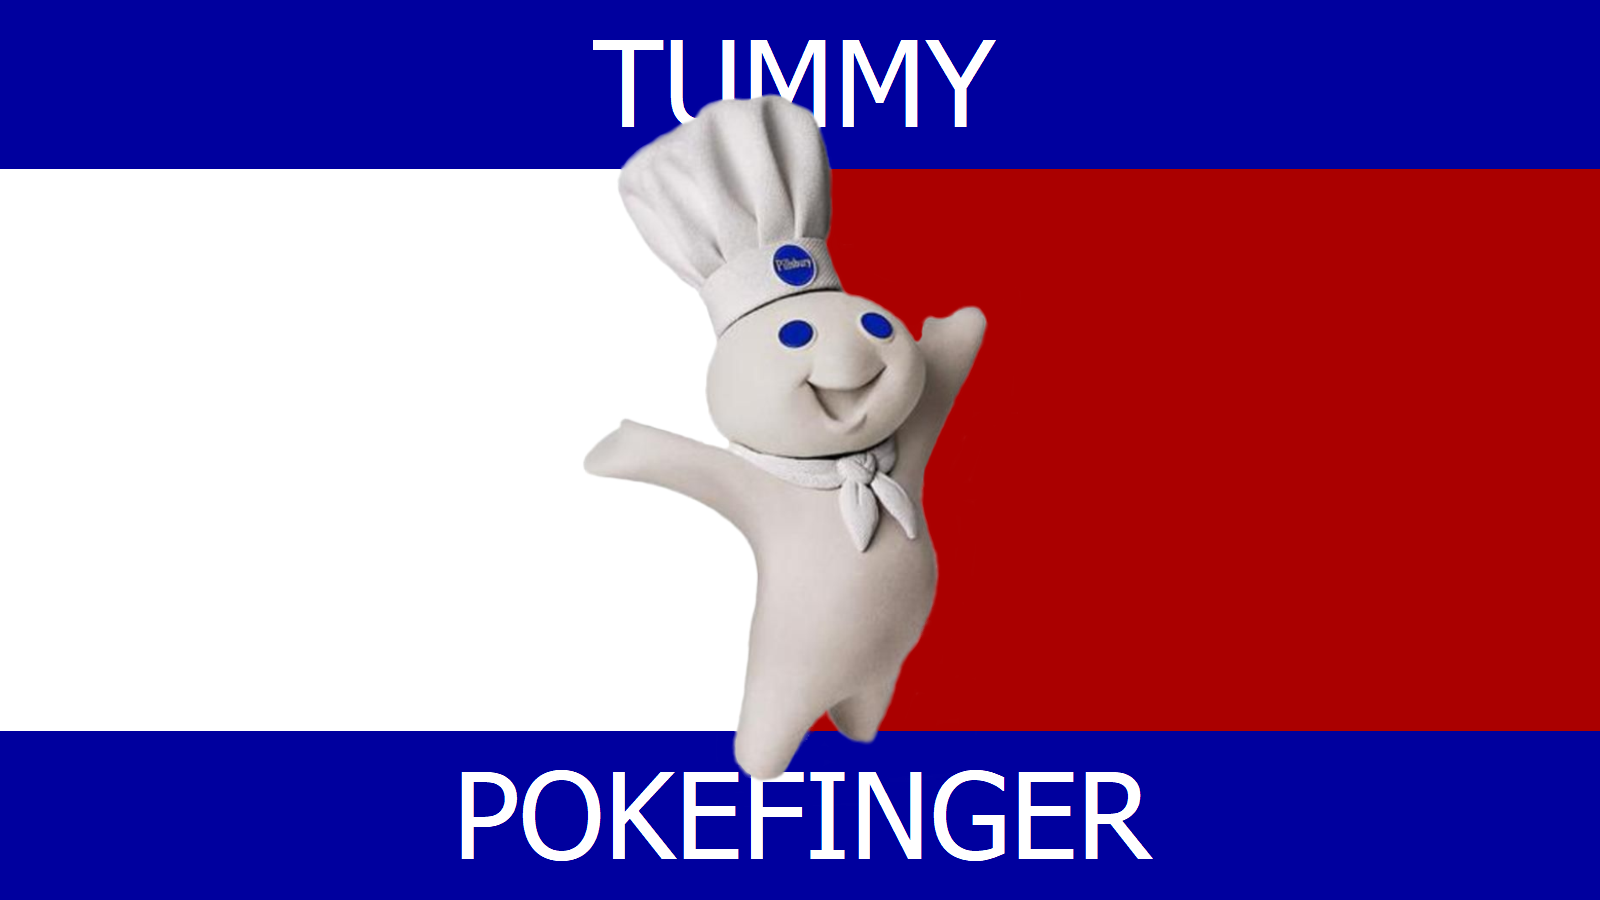 Tummy Pokefinger ; Pillsbury Dough Boy. Pillsbury dough